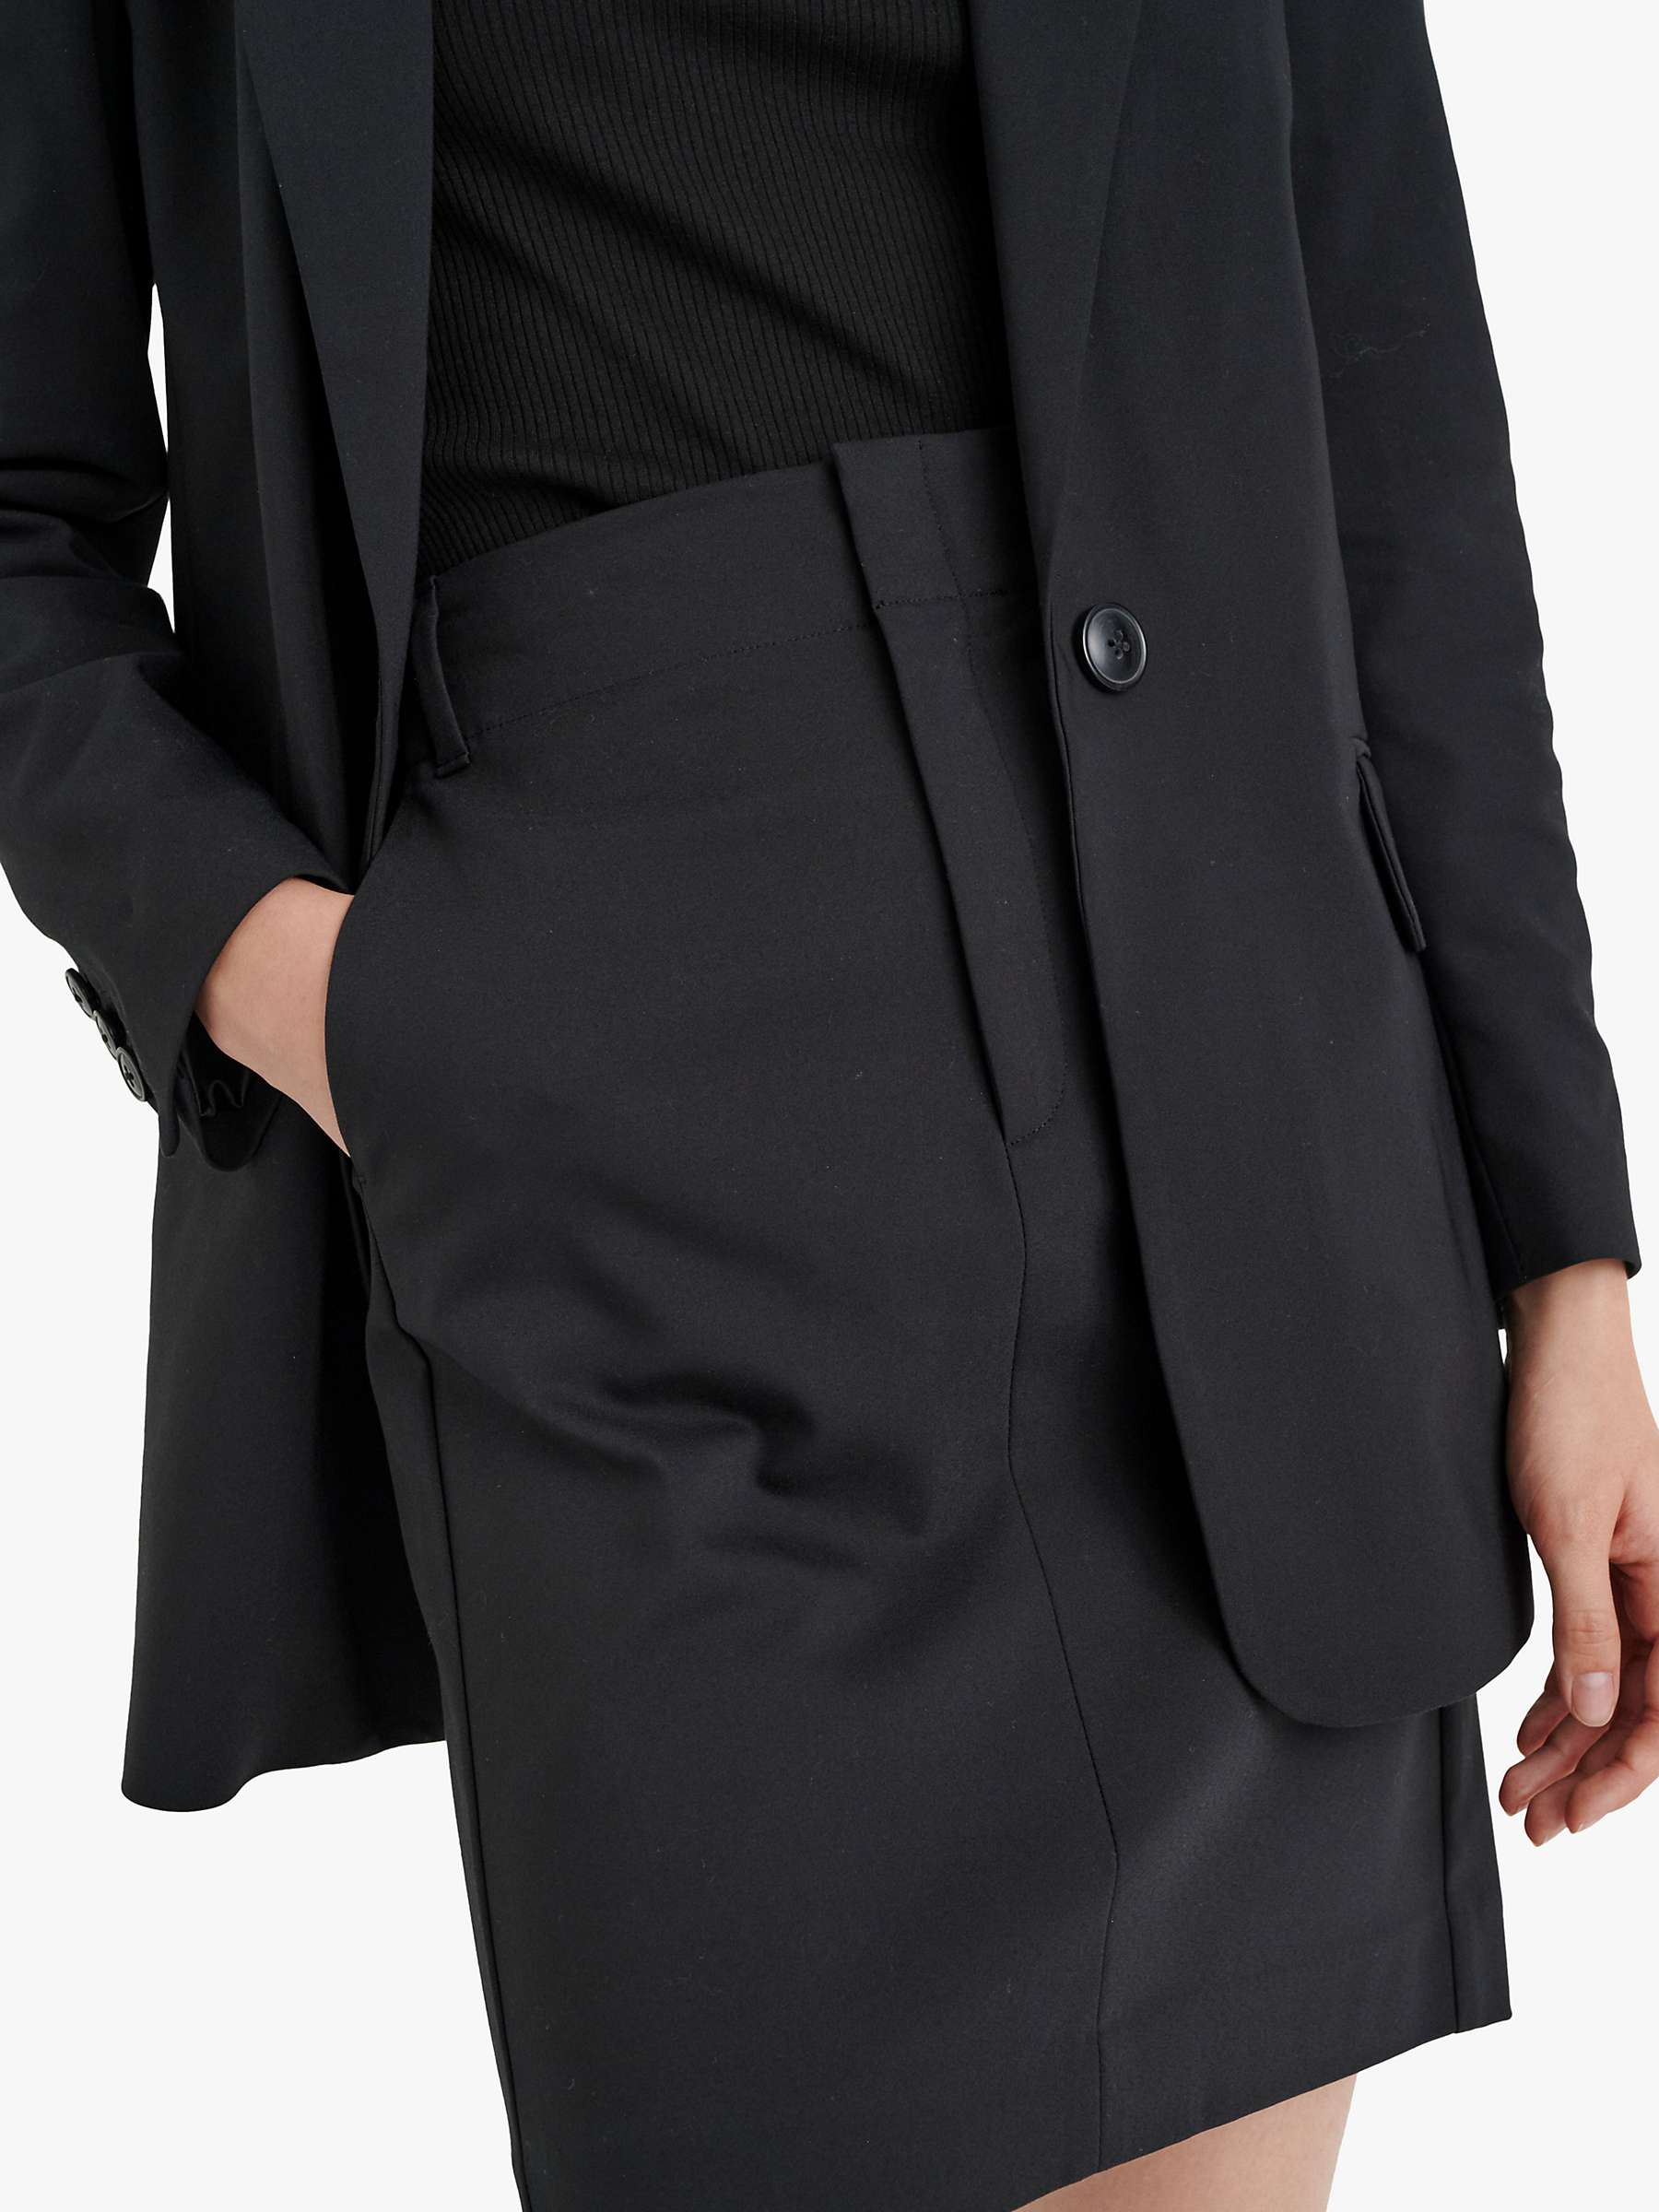 Buy InWear Zella Skirt, Black Online at johnlewis.com